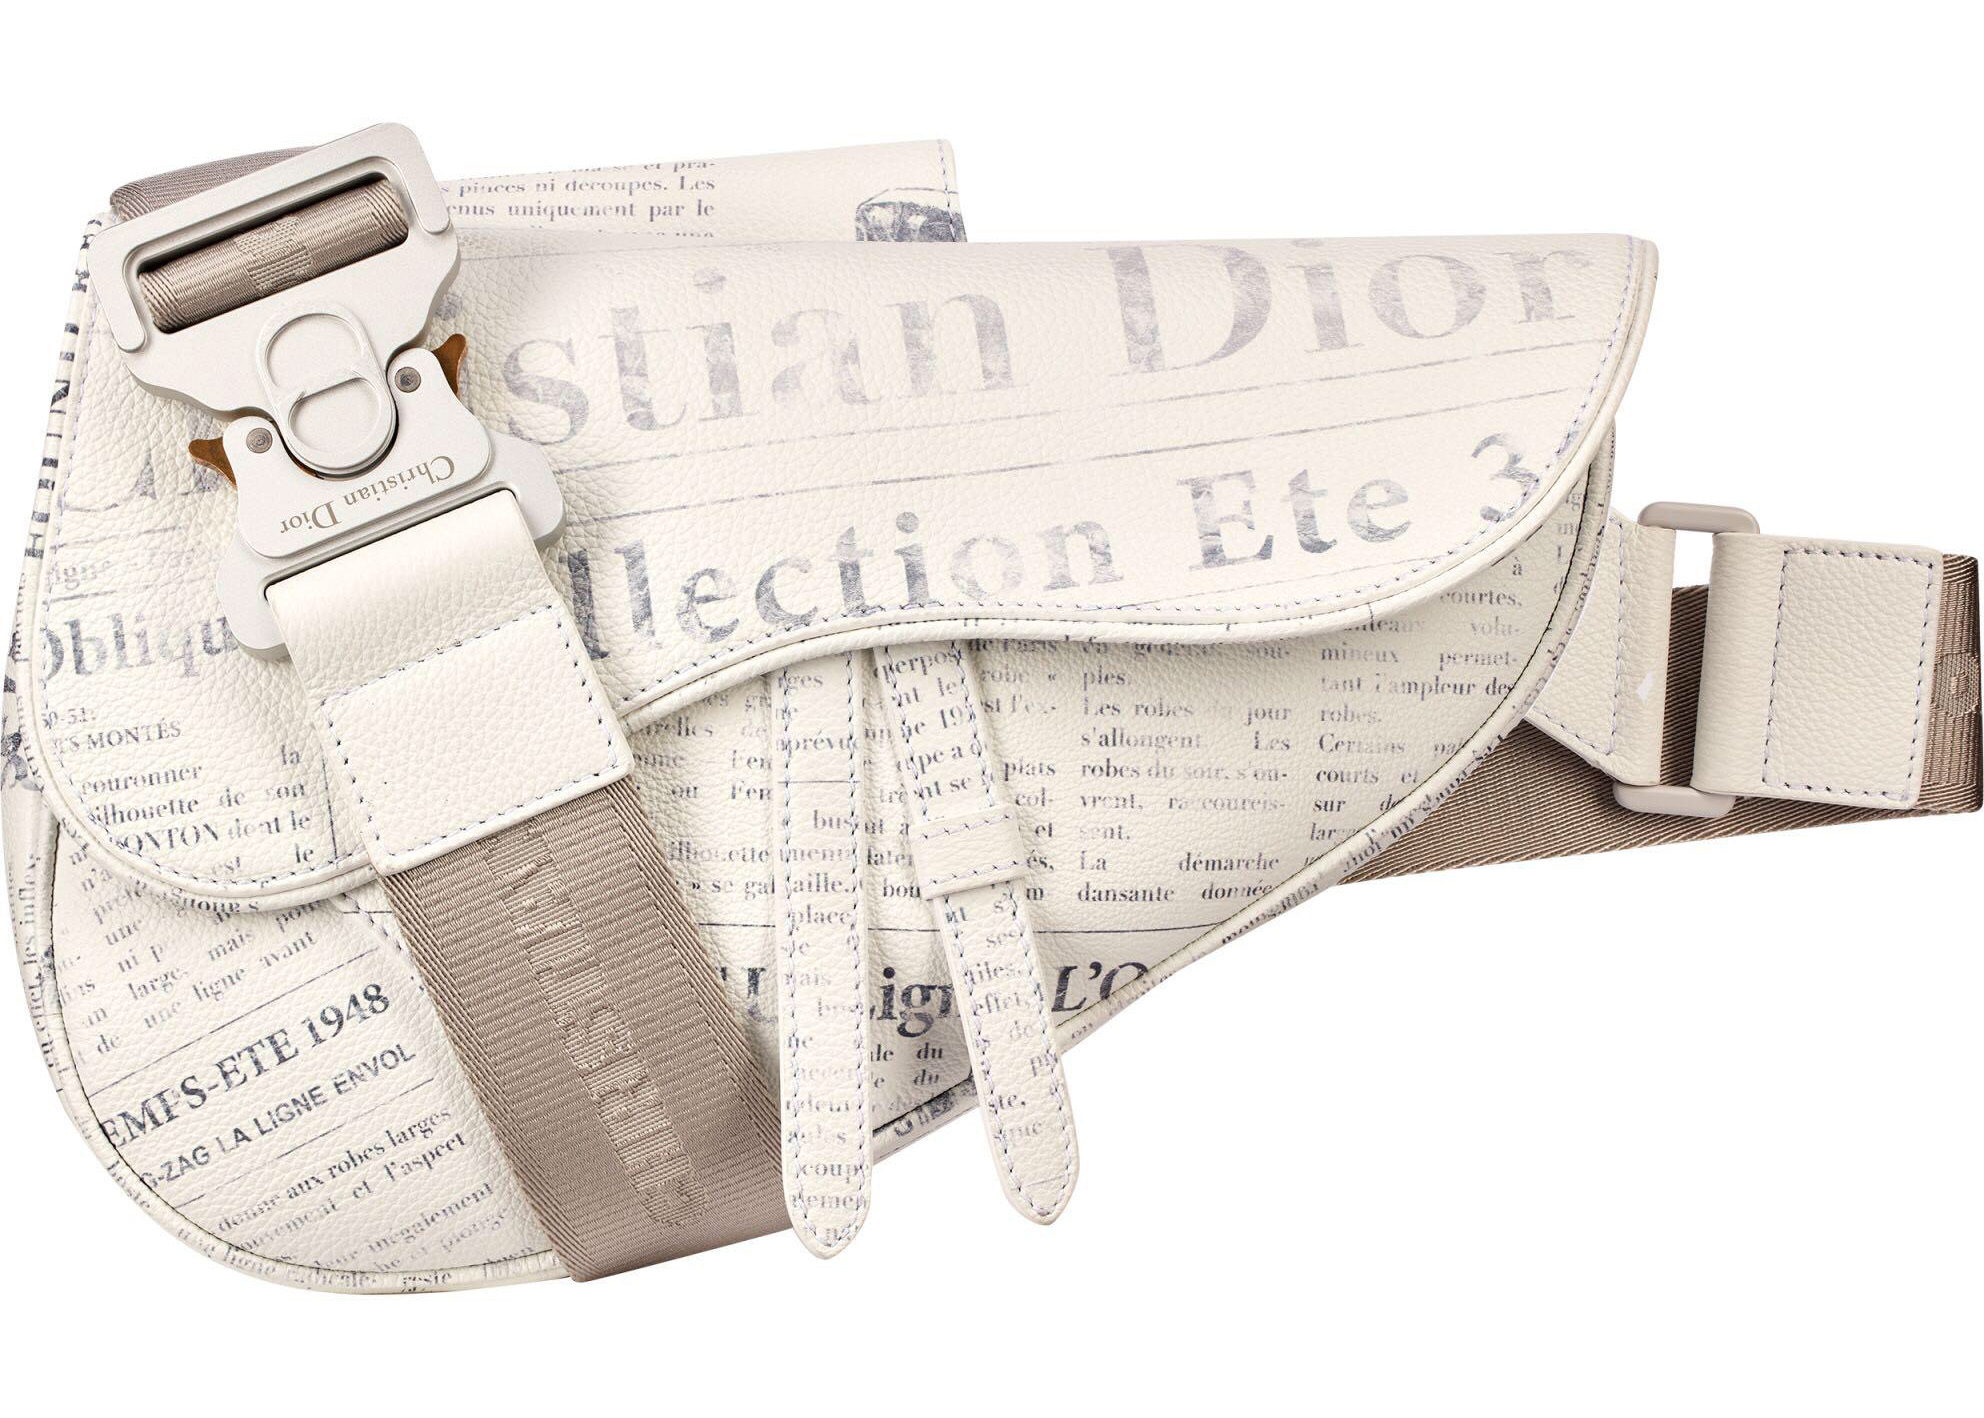 dior newspaper bag